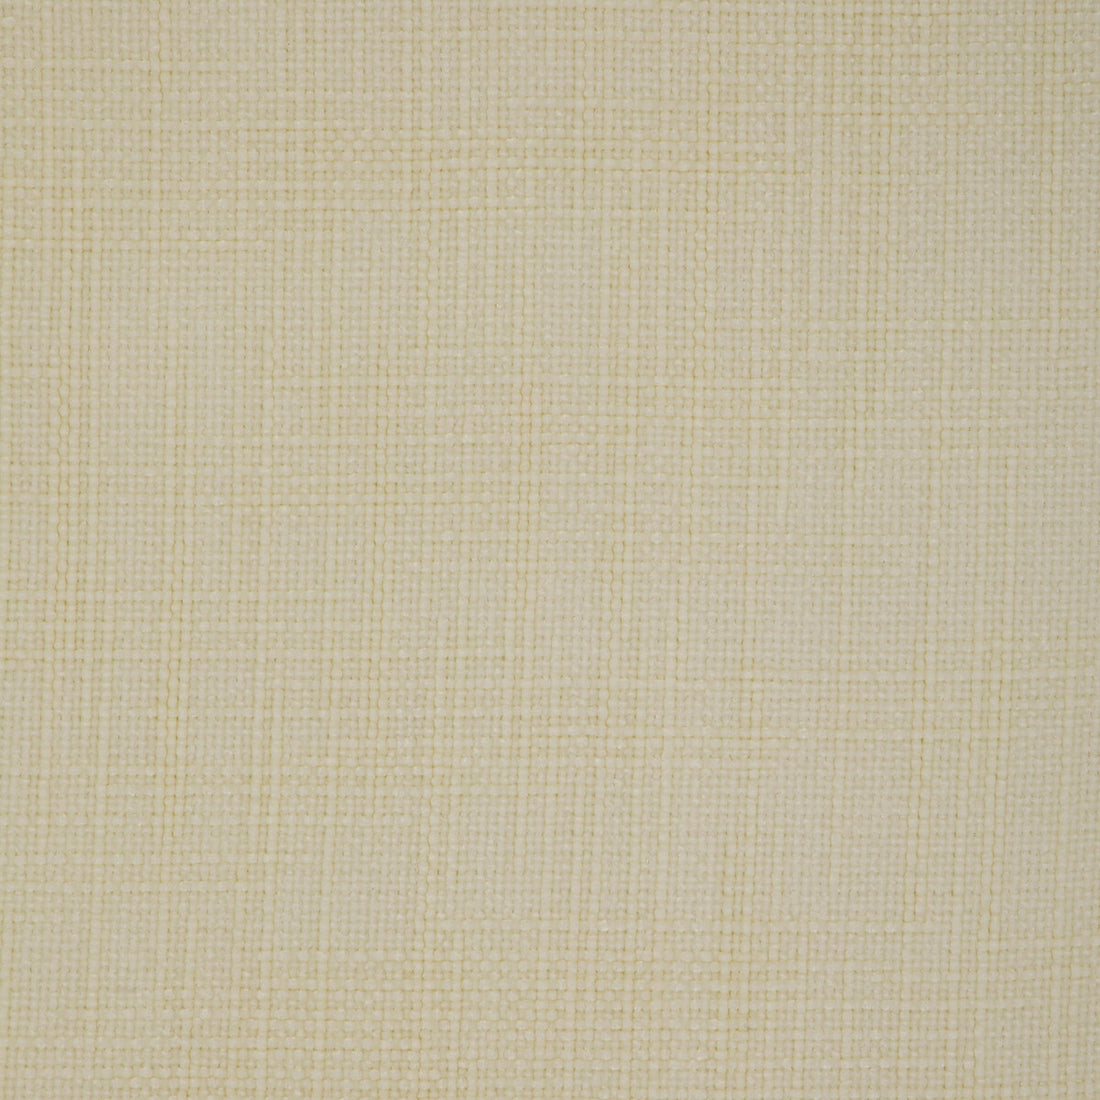 Kravet Smart fabric in 36991-111 color - pattern 36991.111.0 - by Kravet Smart in the Performance Kravetarmor collection